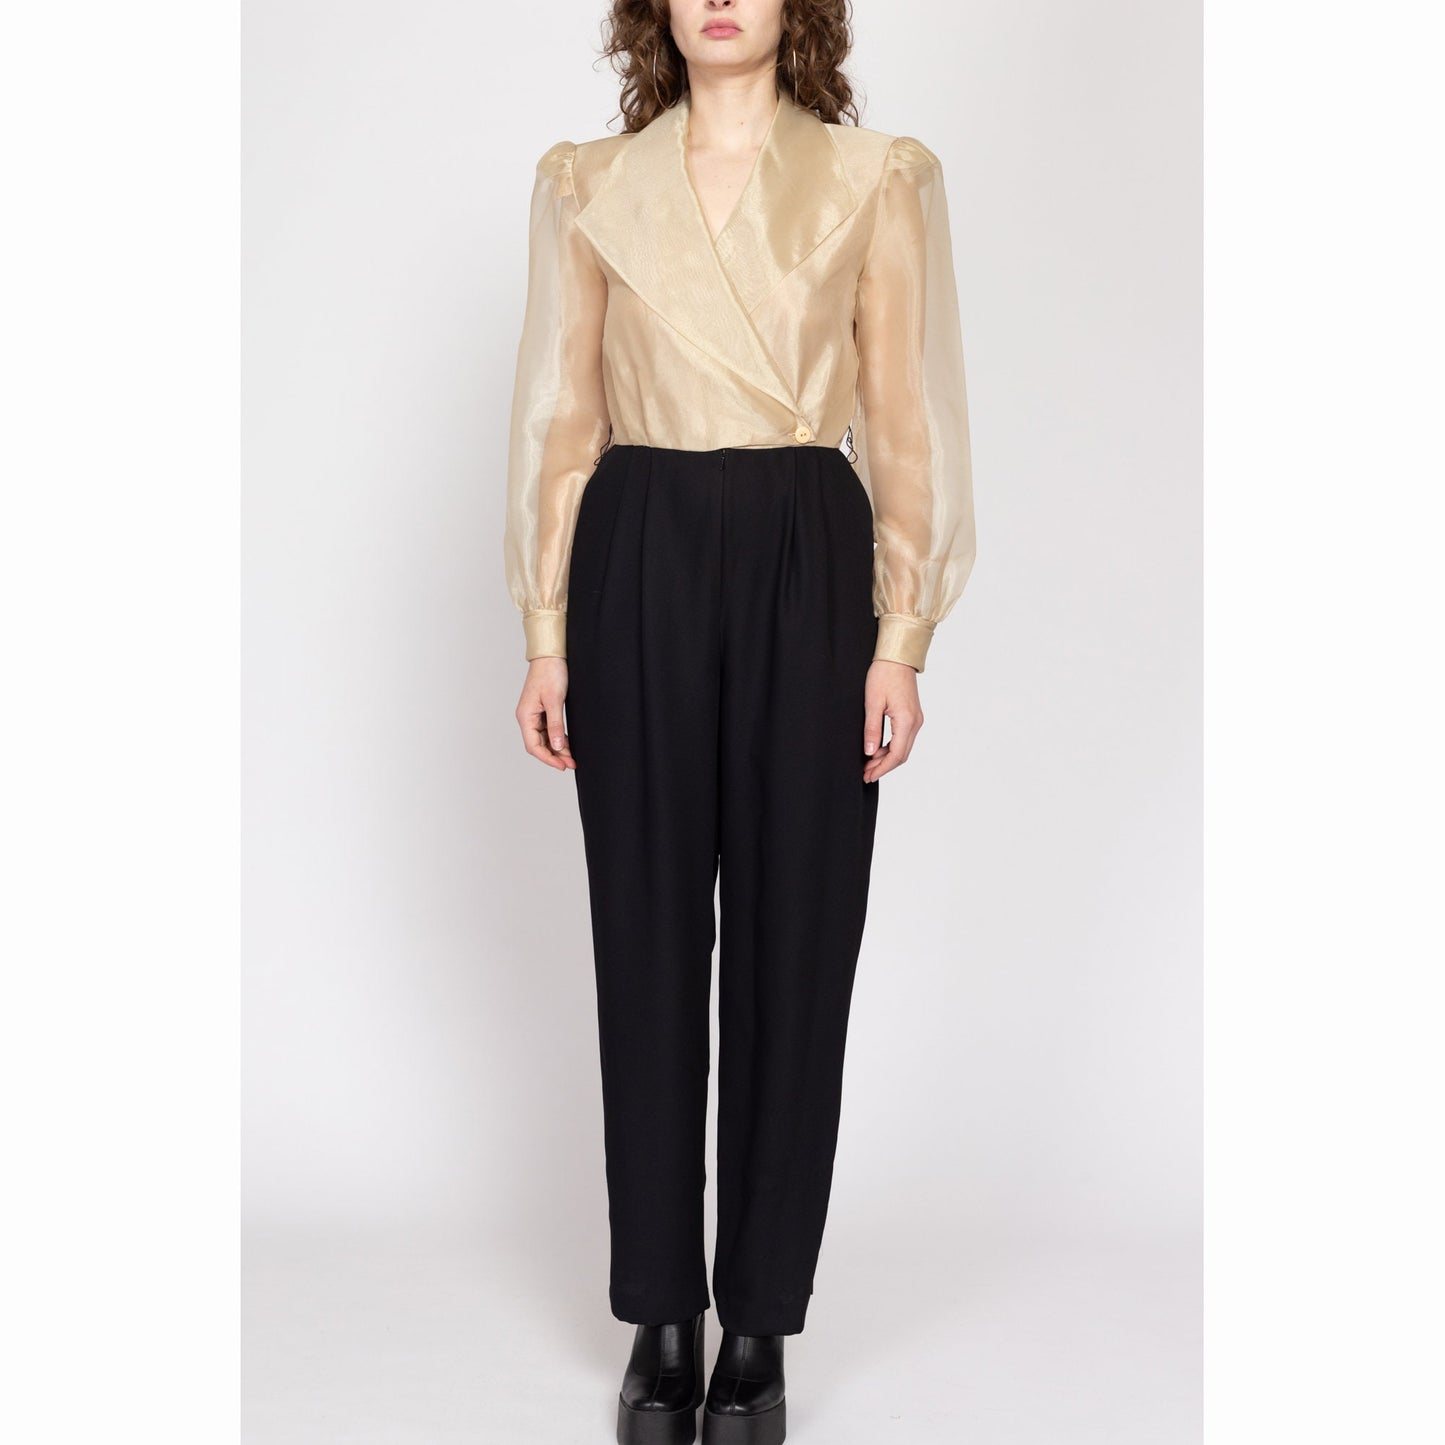 Medium 80s Organza Two Tone Jumpsuit | Vintage Gold Black Sheer Sleeve Collared Pantsuit